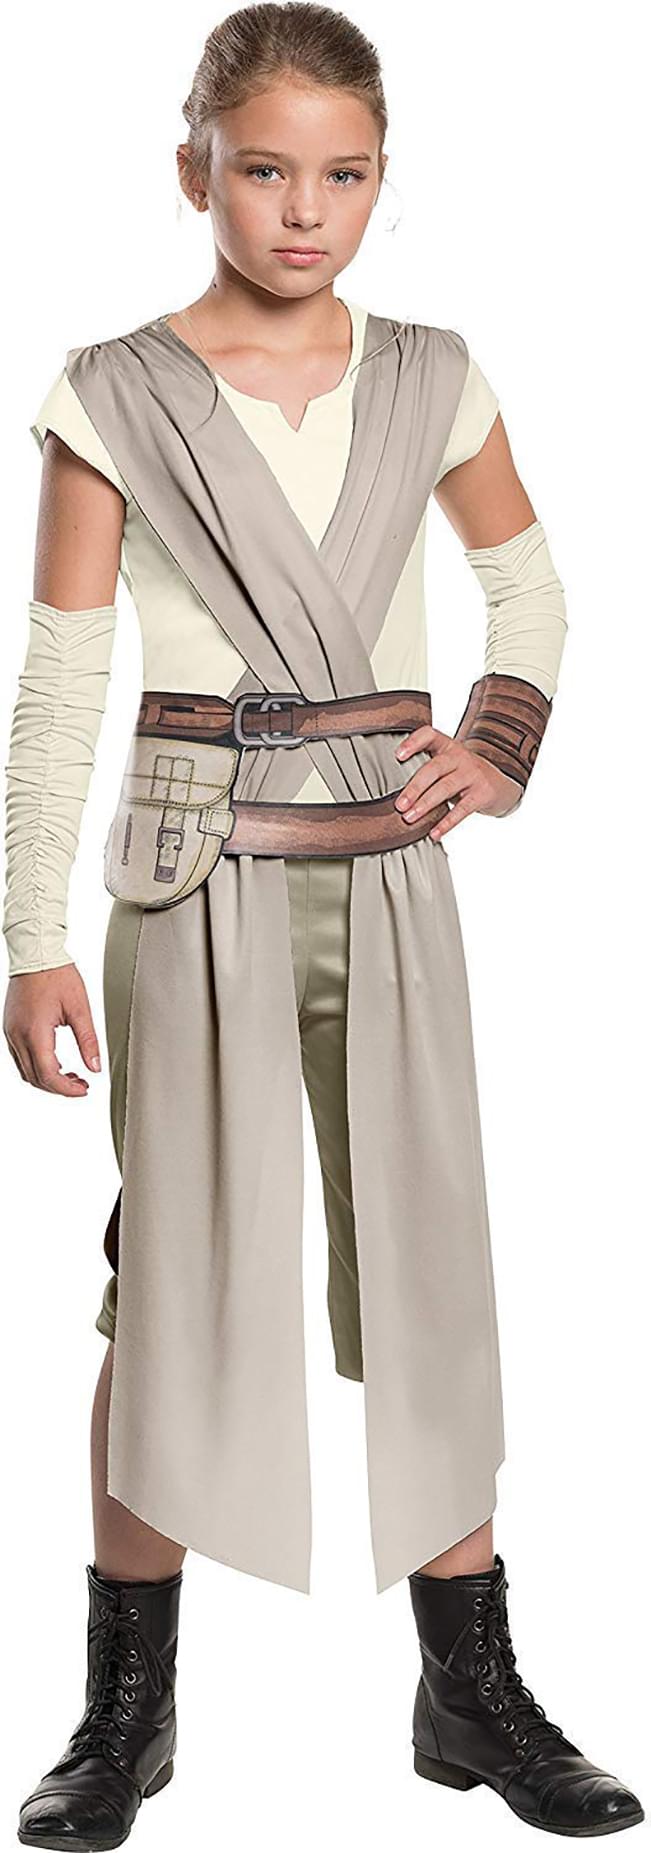 Star Wars The Force Awakens Rey Child Costume